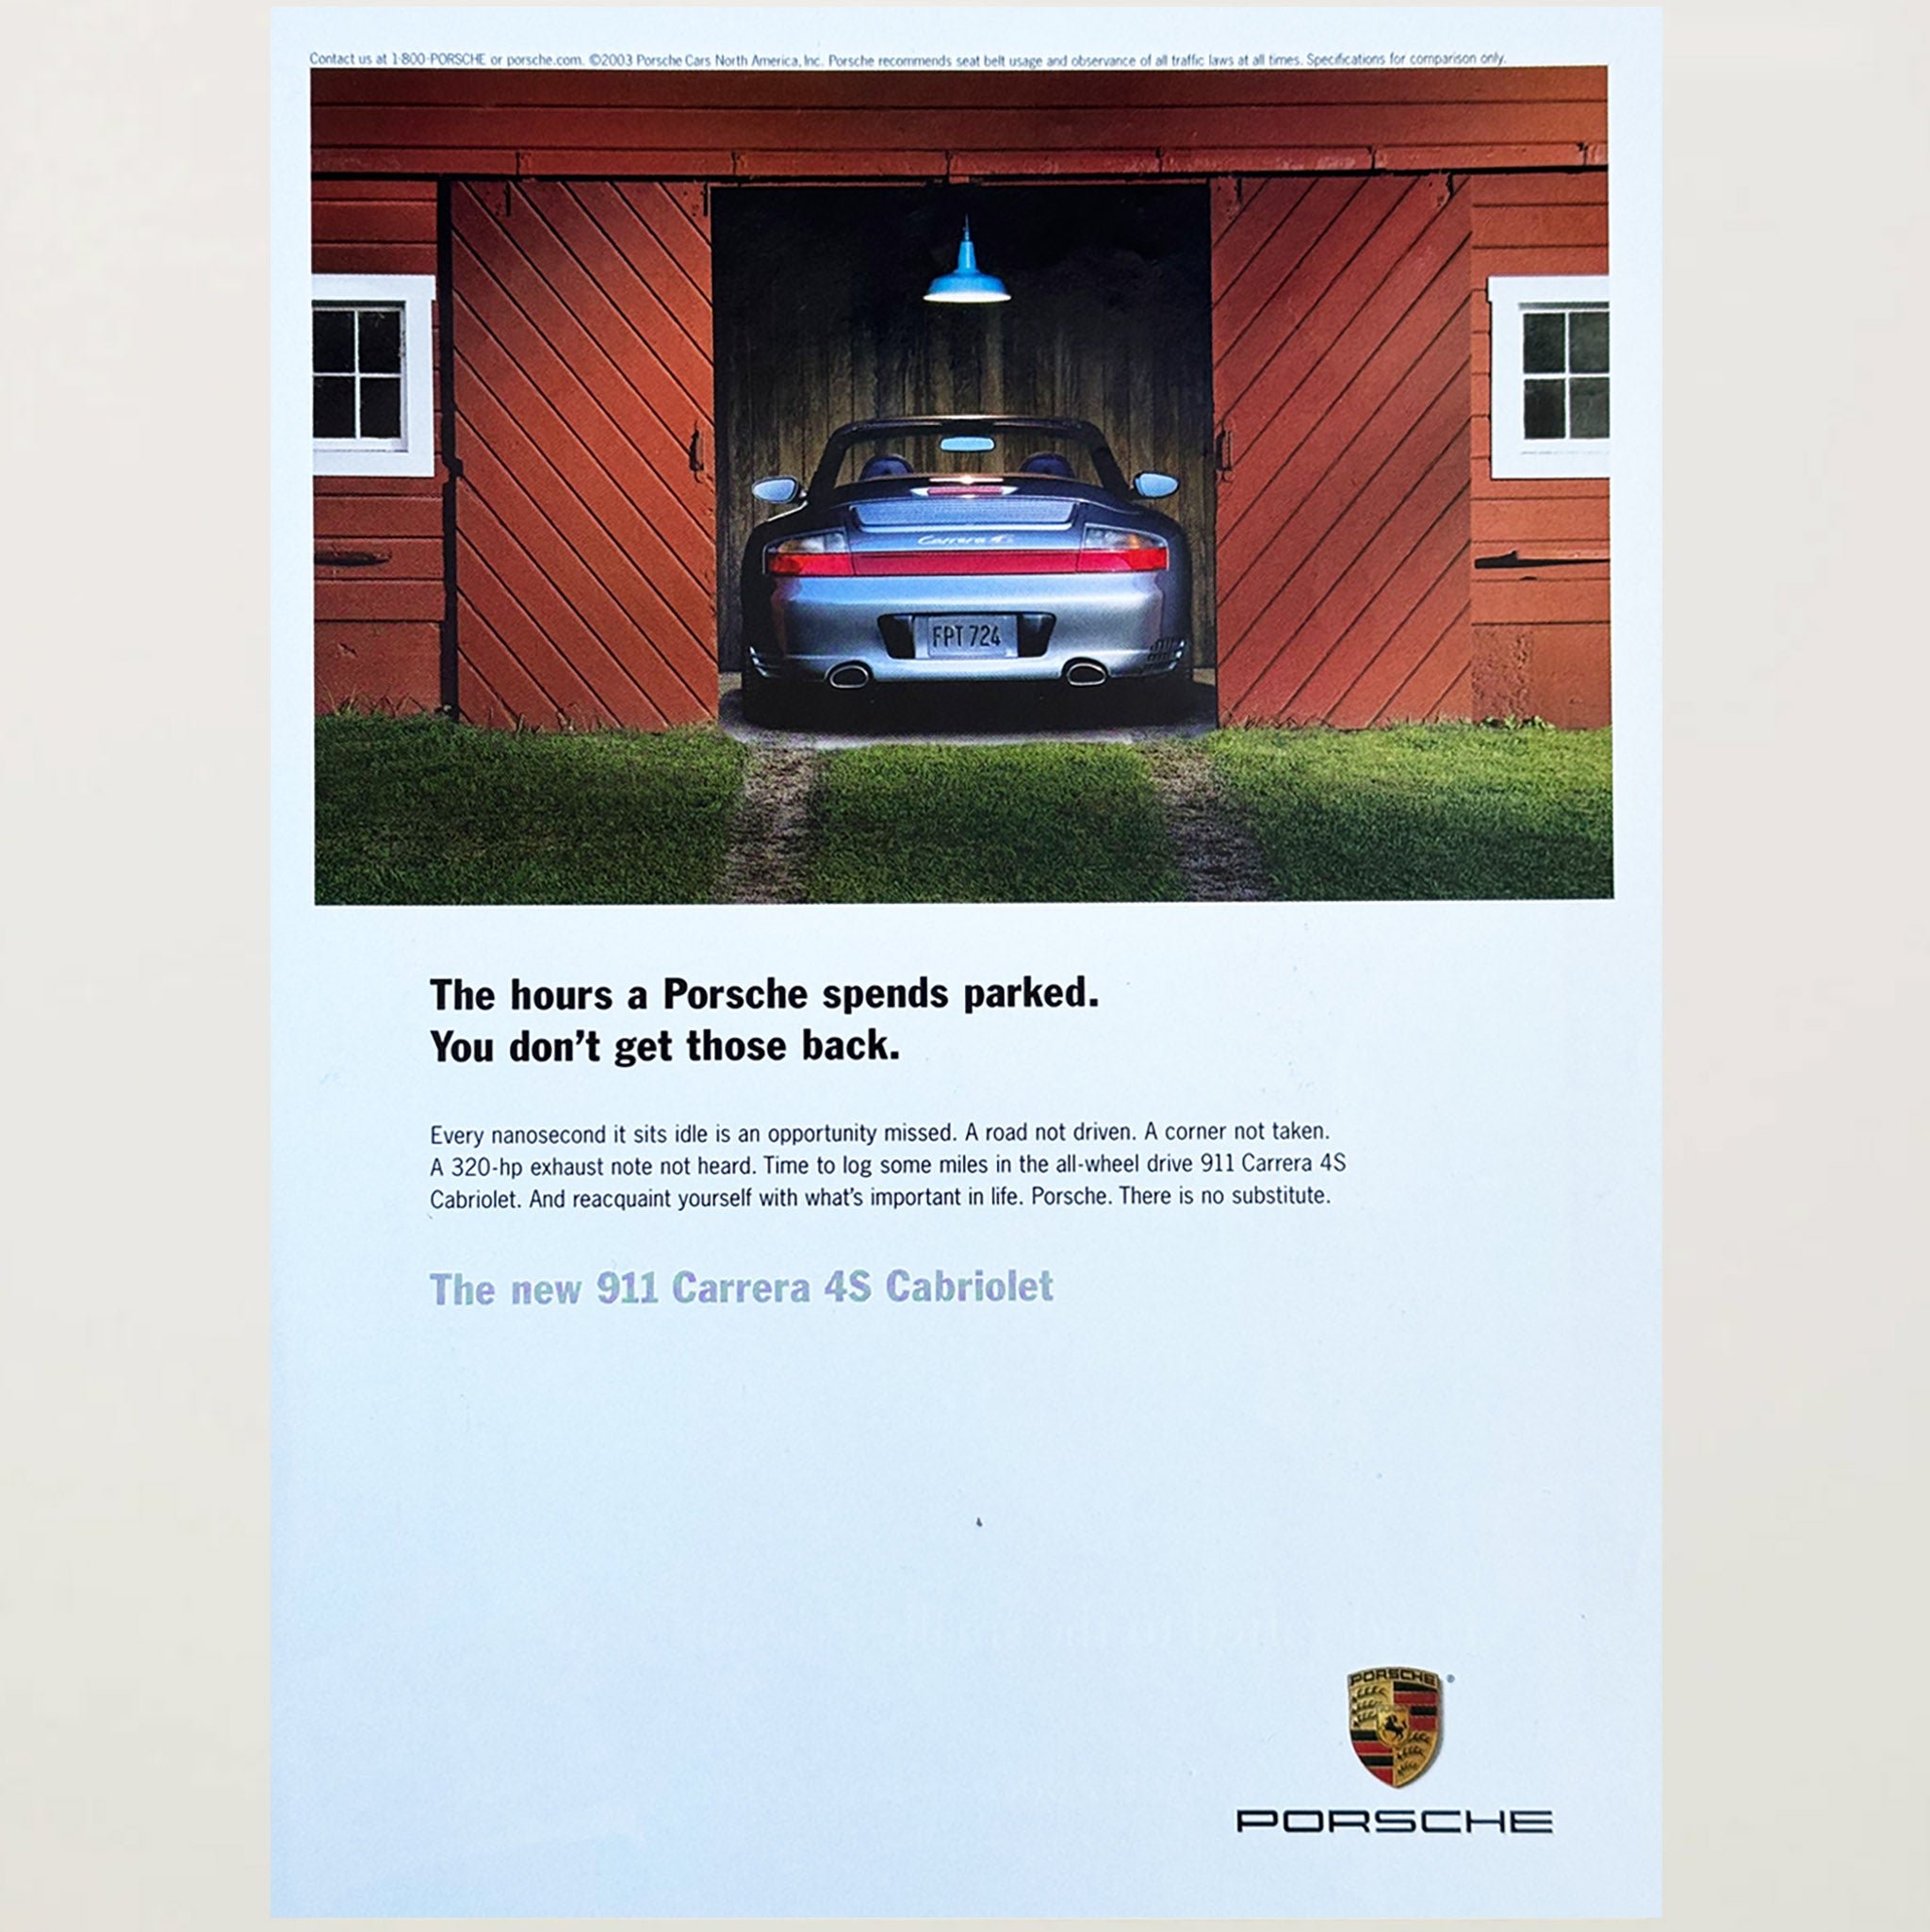 Framed Porsche 911 Carrera 4S Cabriolet Advertisement